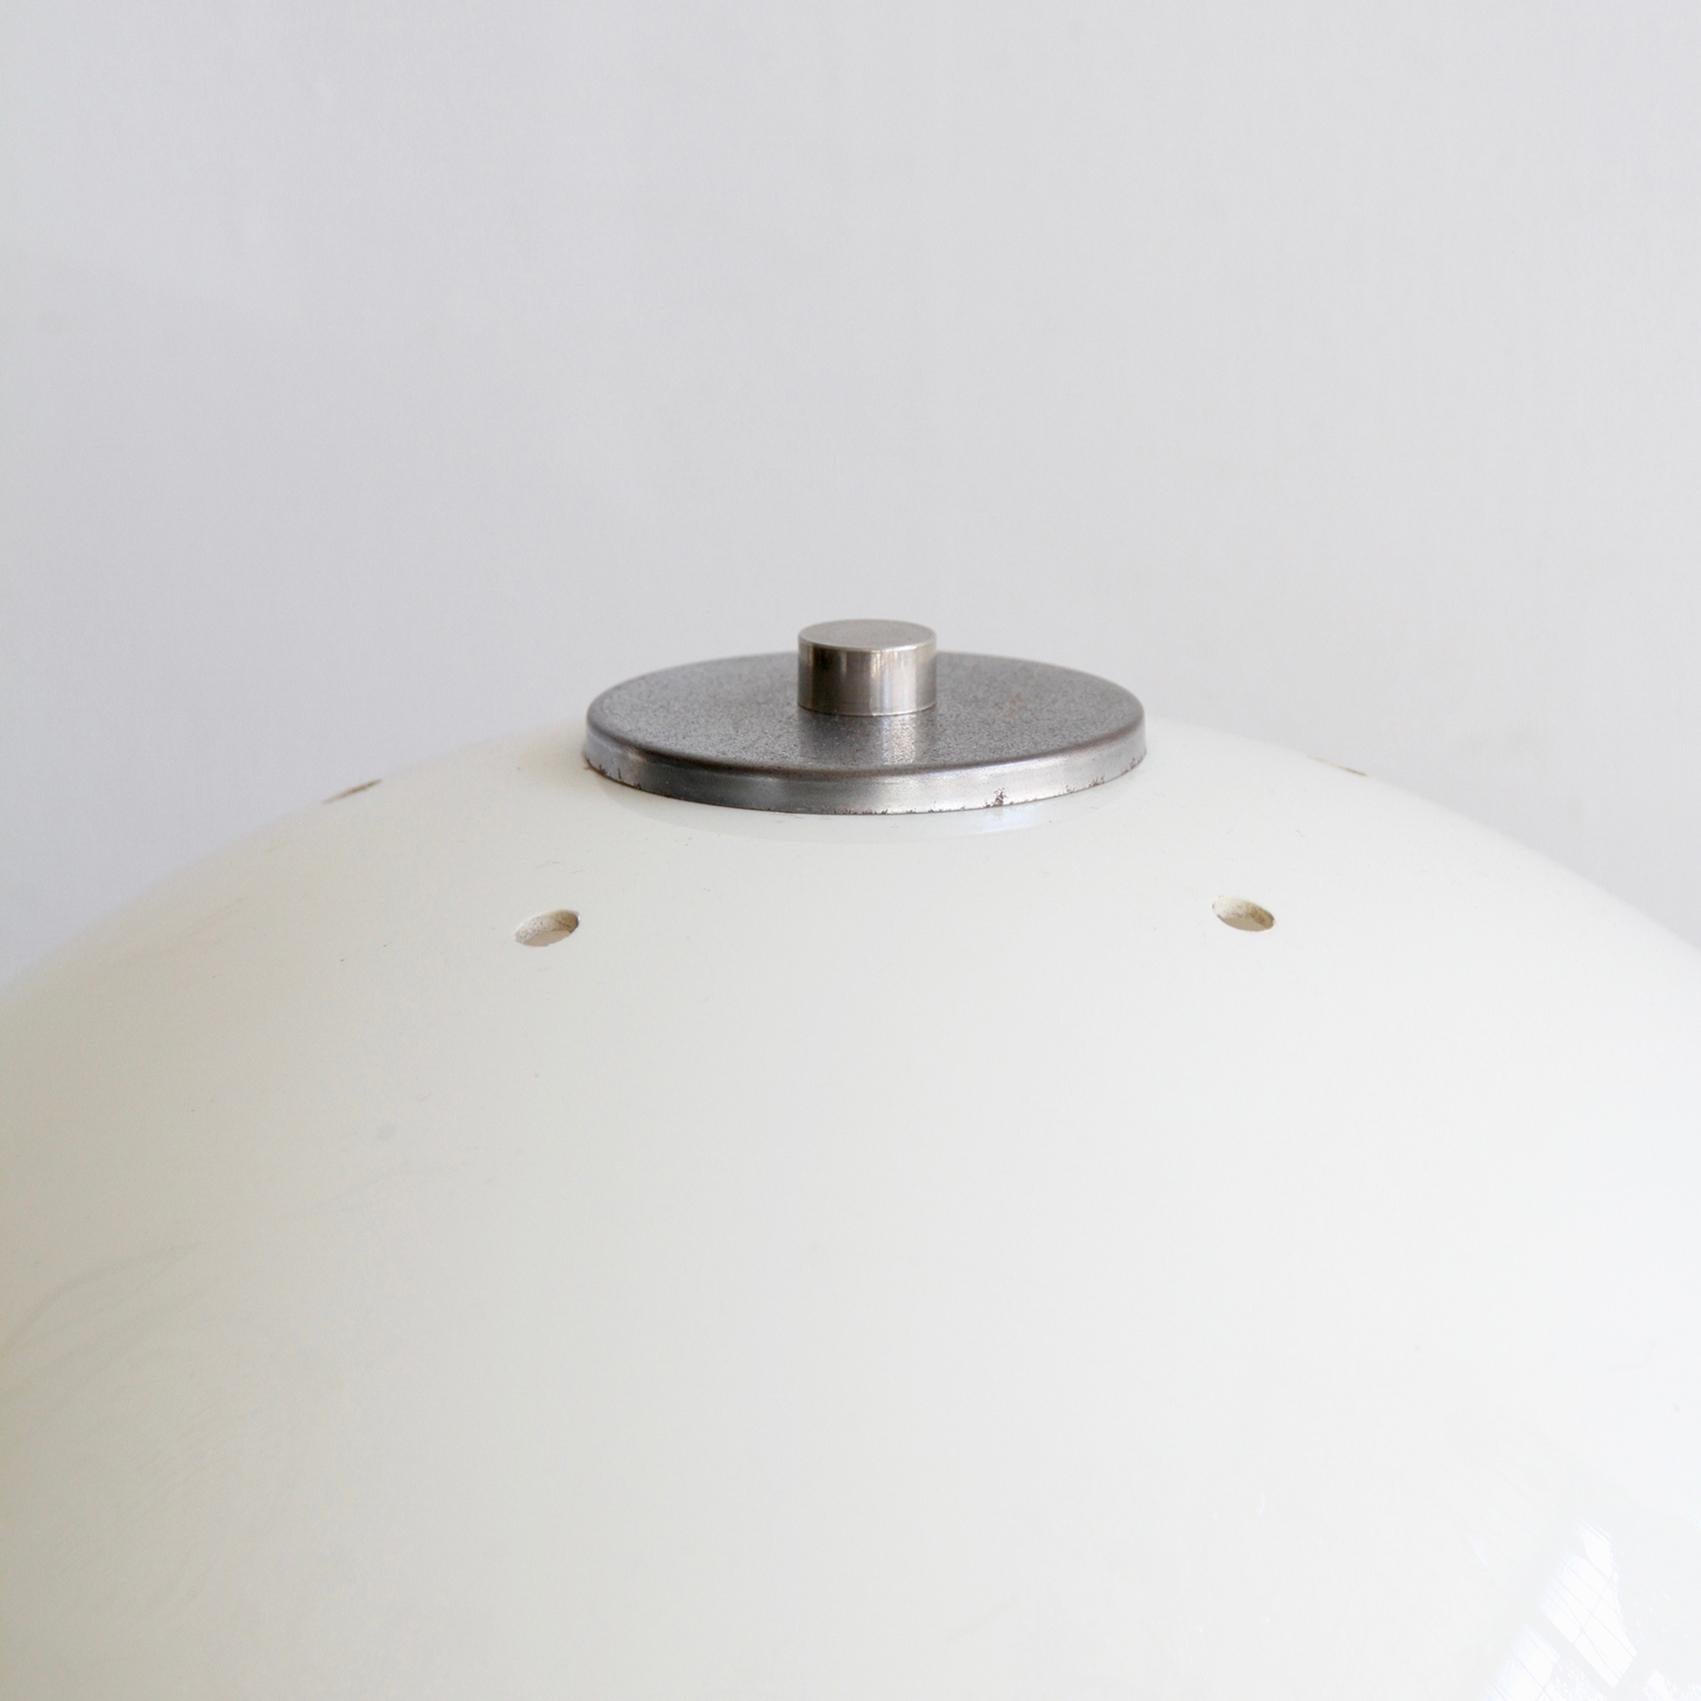 Italian 1970s mushroom table lamp by Prova. With cream Perspex shade, spun aluminium base and chrome stand.